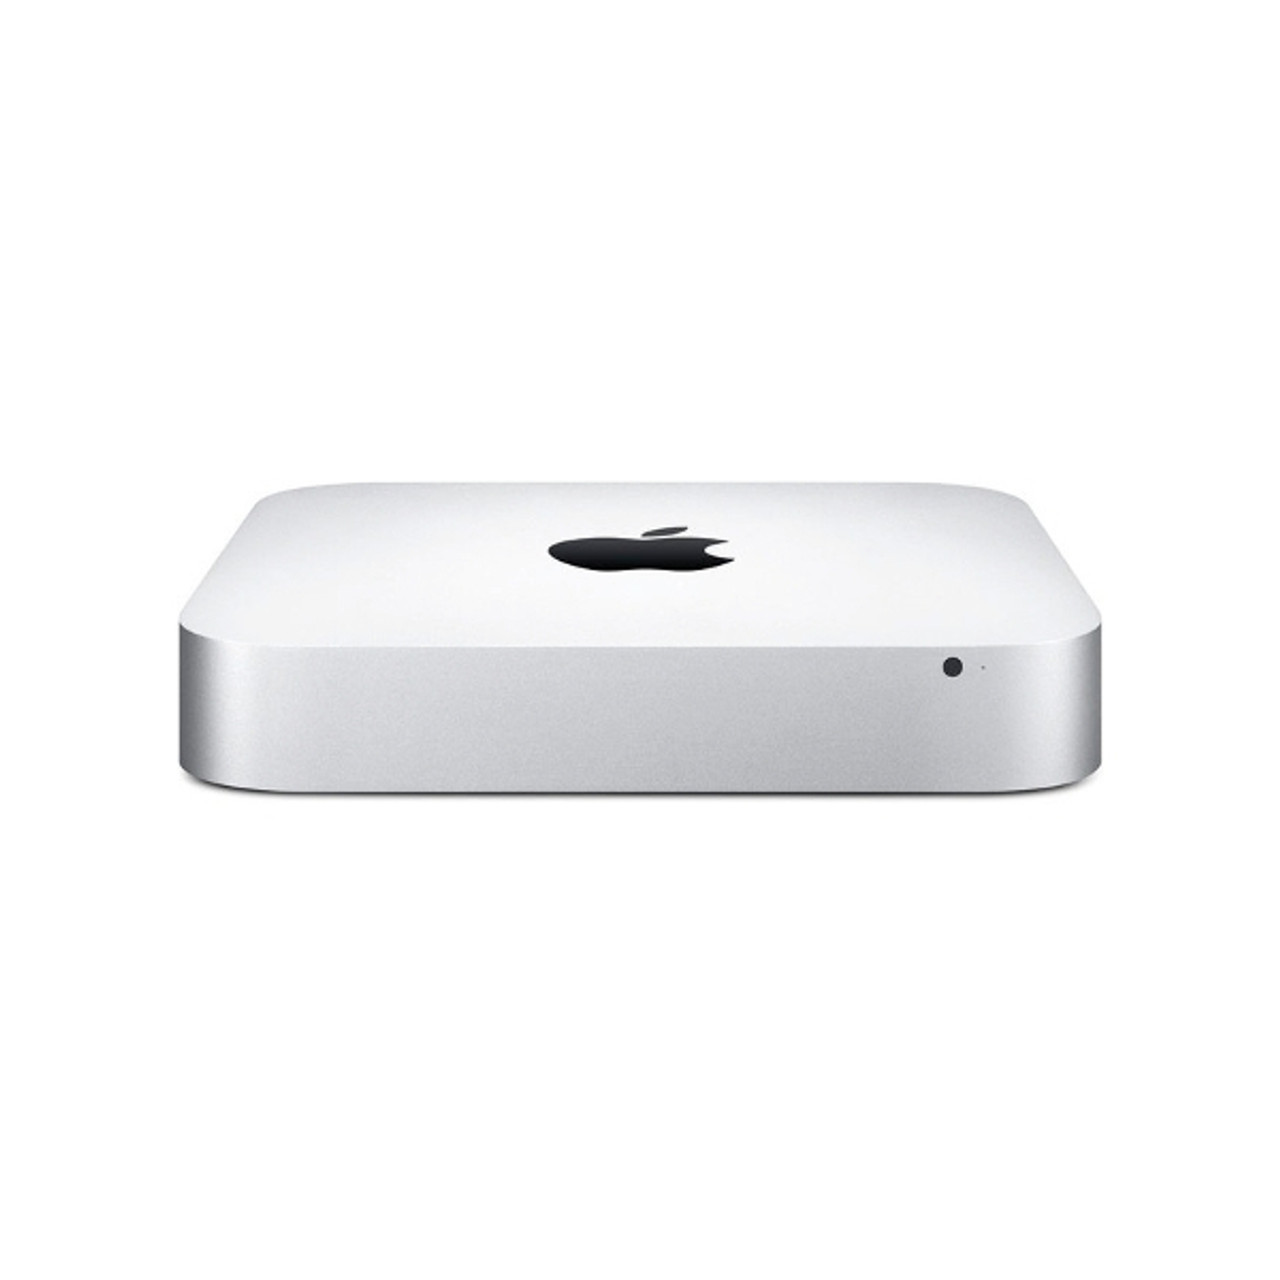 Apple Mac mini 2.6GHz Quad-core i7 (Late 2012) MD388LL/A